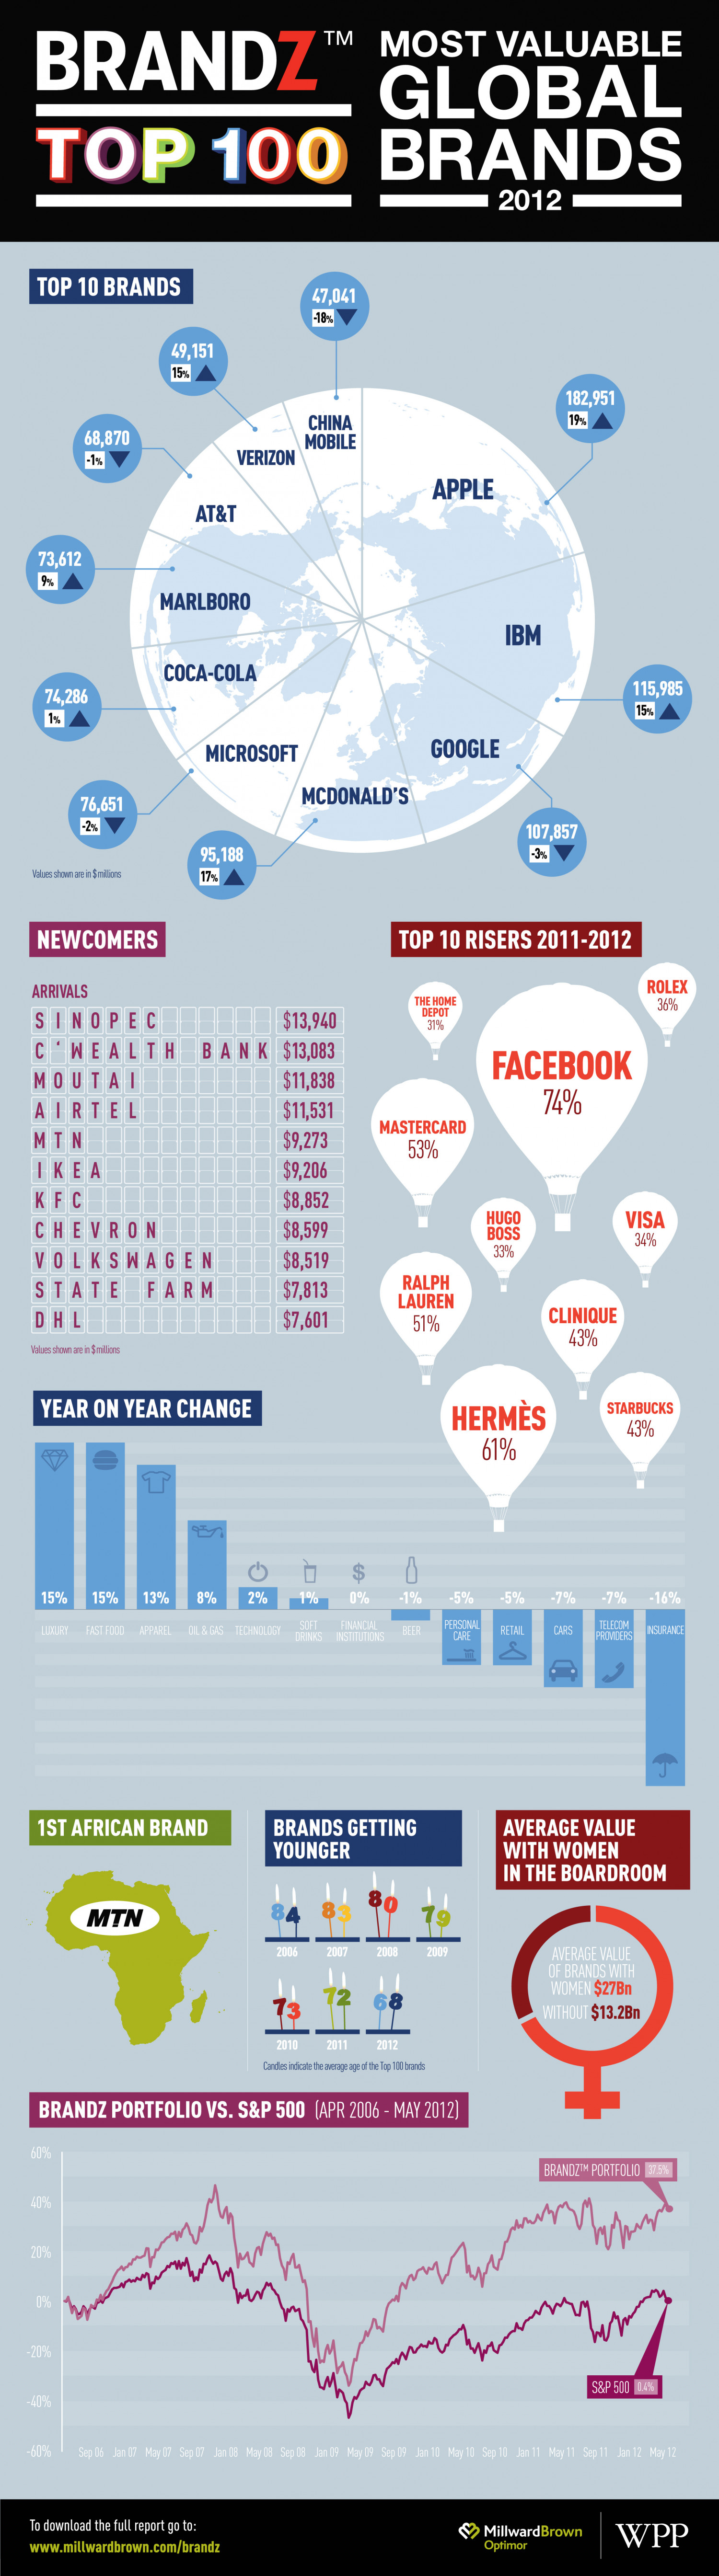 BrandZ Top 100 Most Valuable Global Brands 2012 Infographic